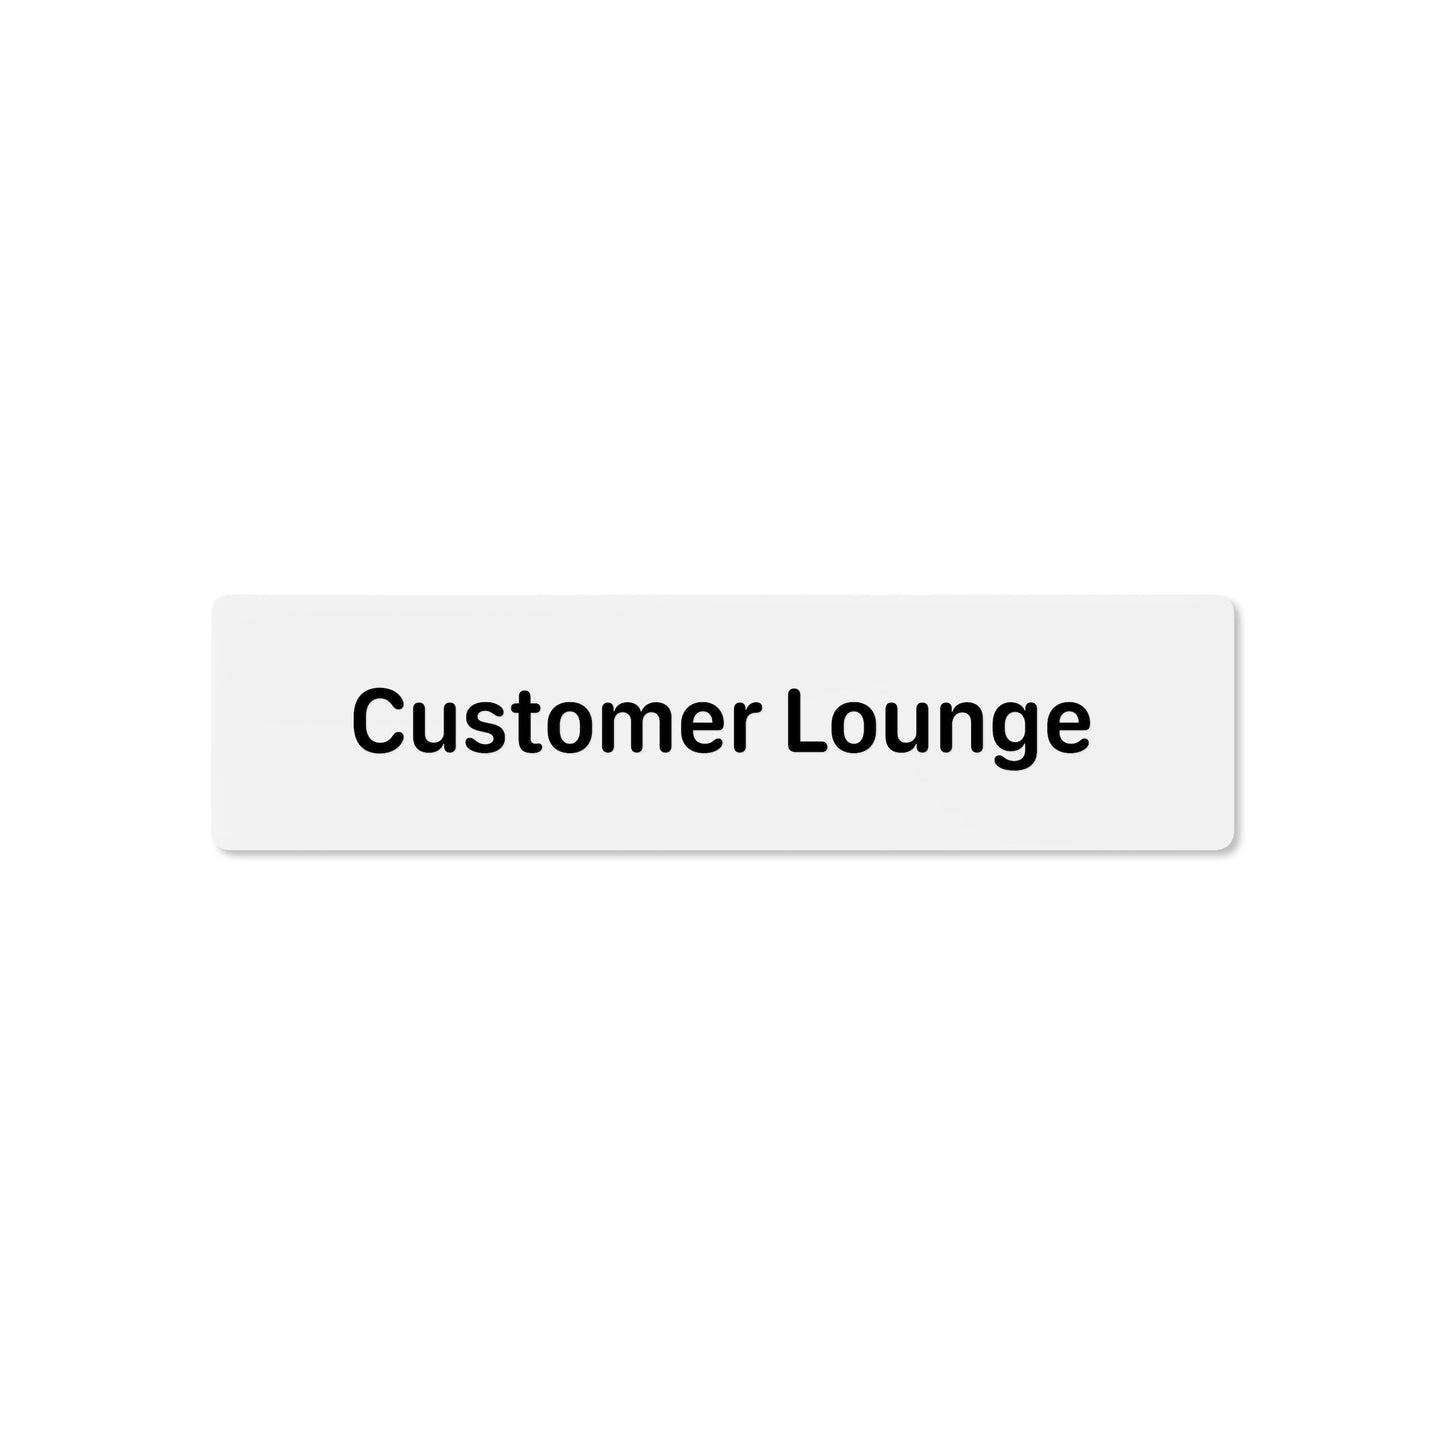 Customer Lounge